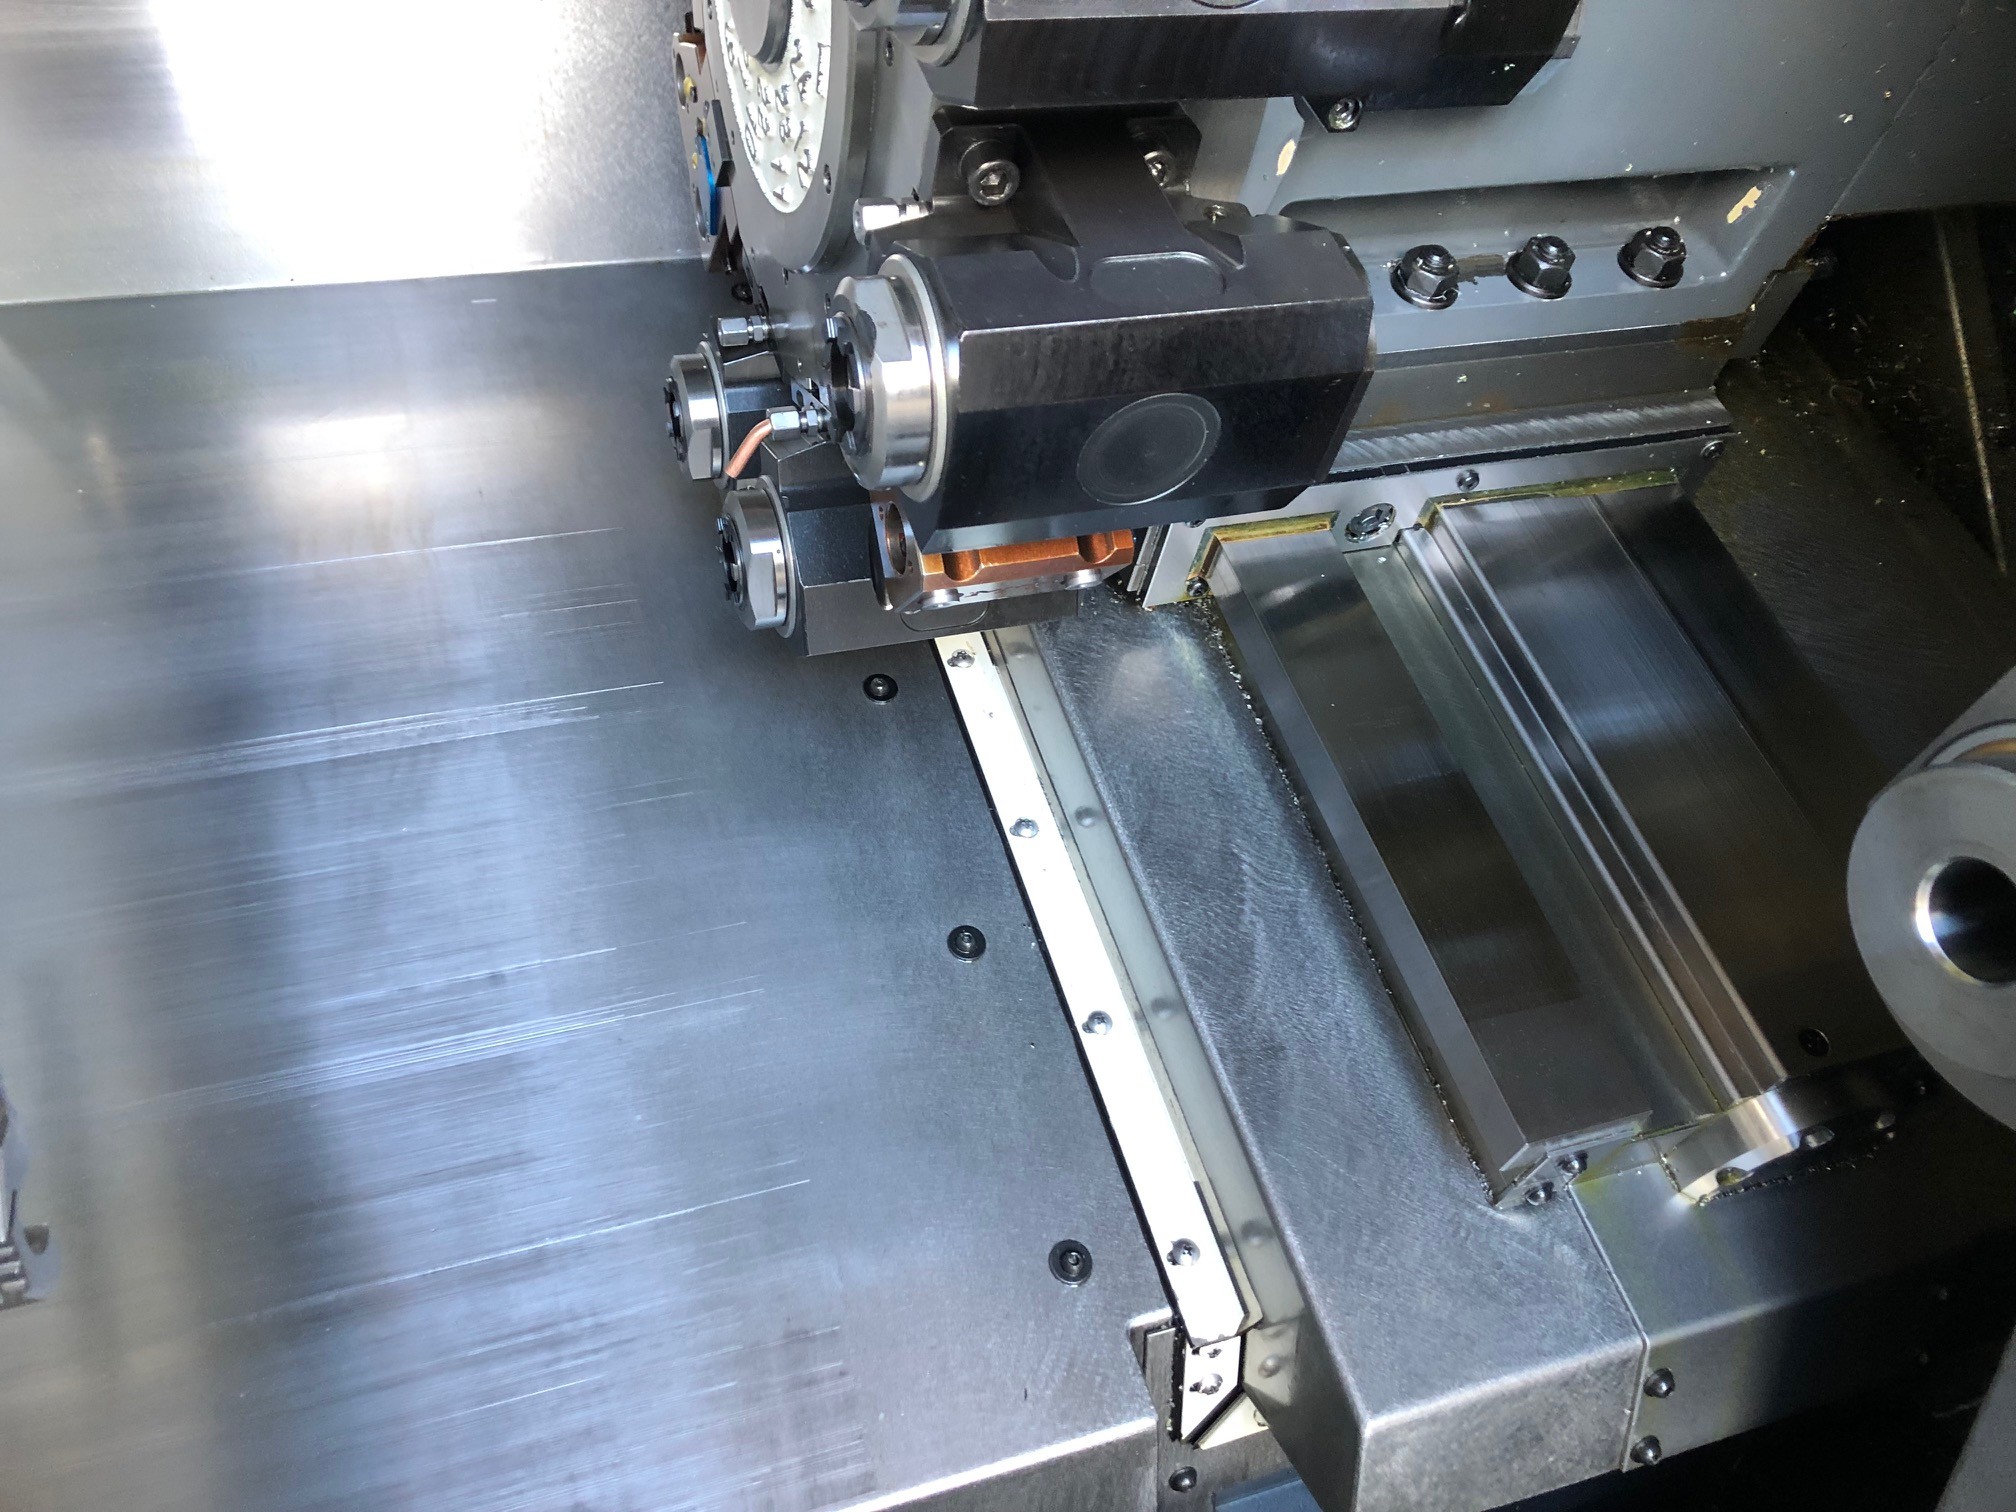 CNC Turning Machine NAKAMURA SC 200 MY photo on Industry-Pilot